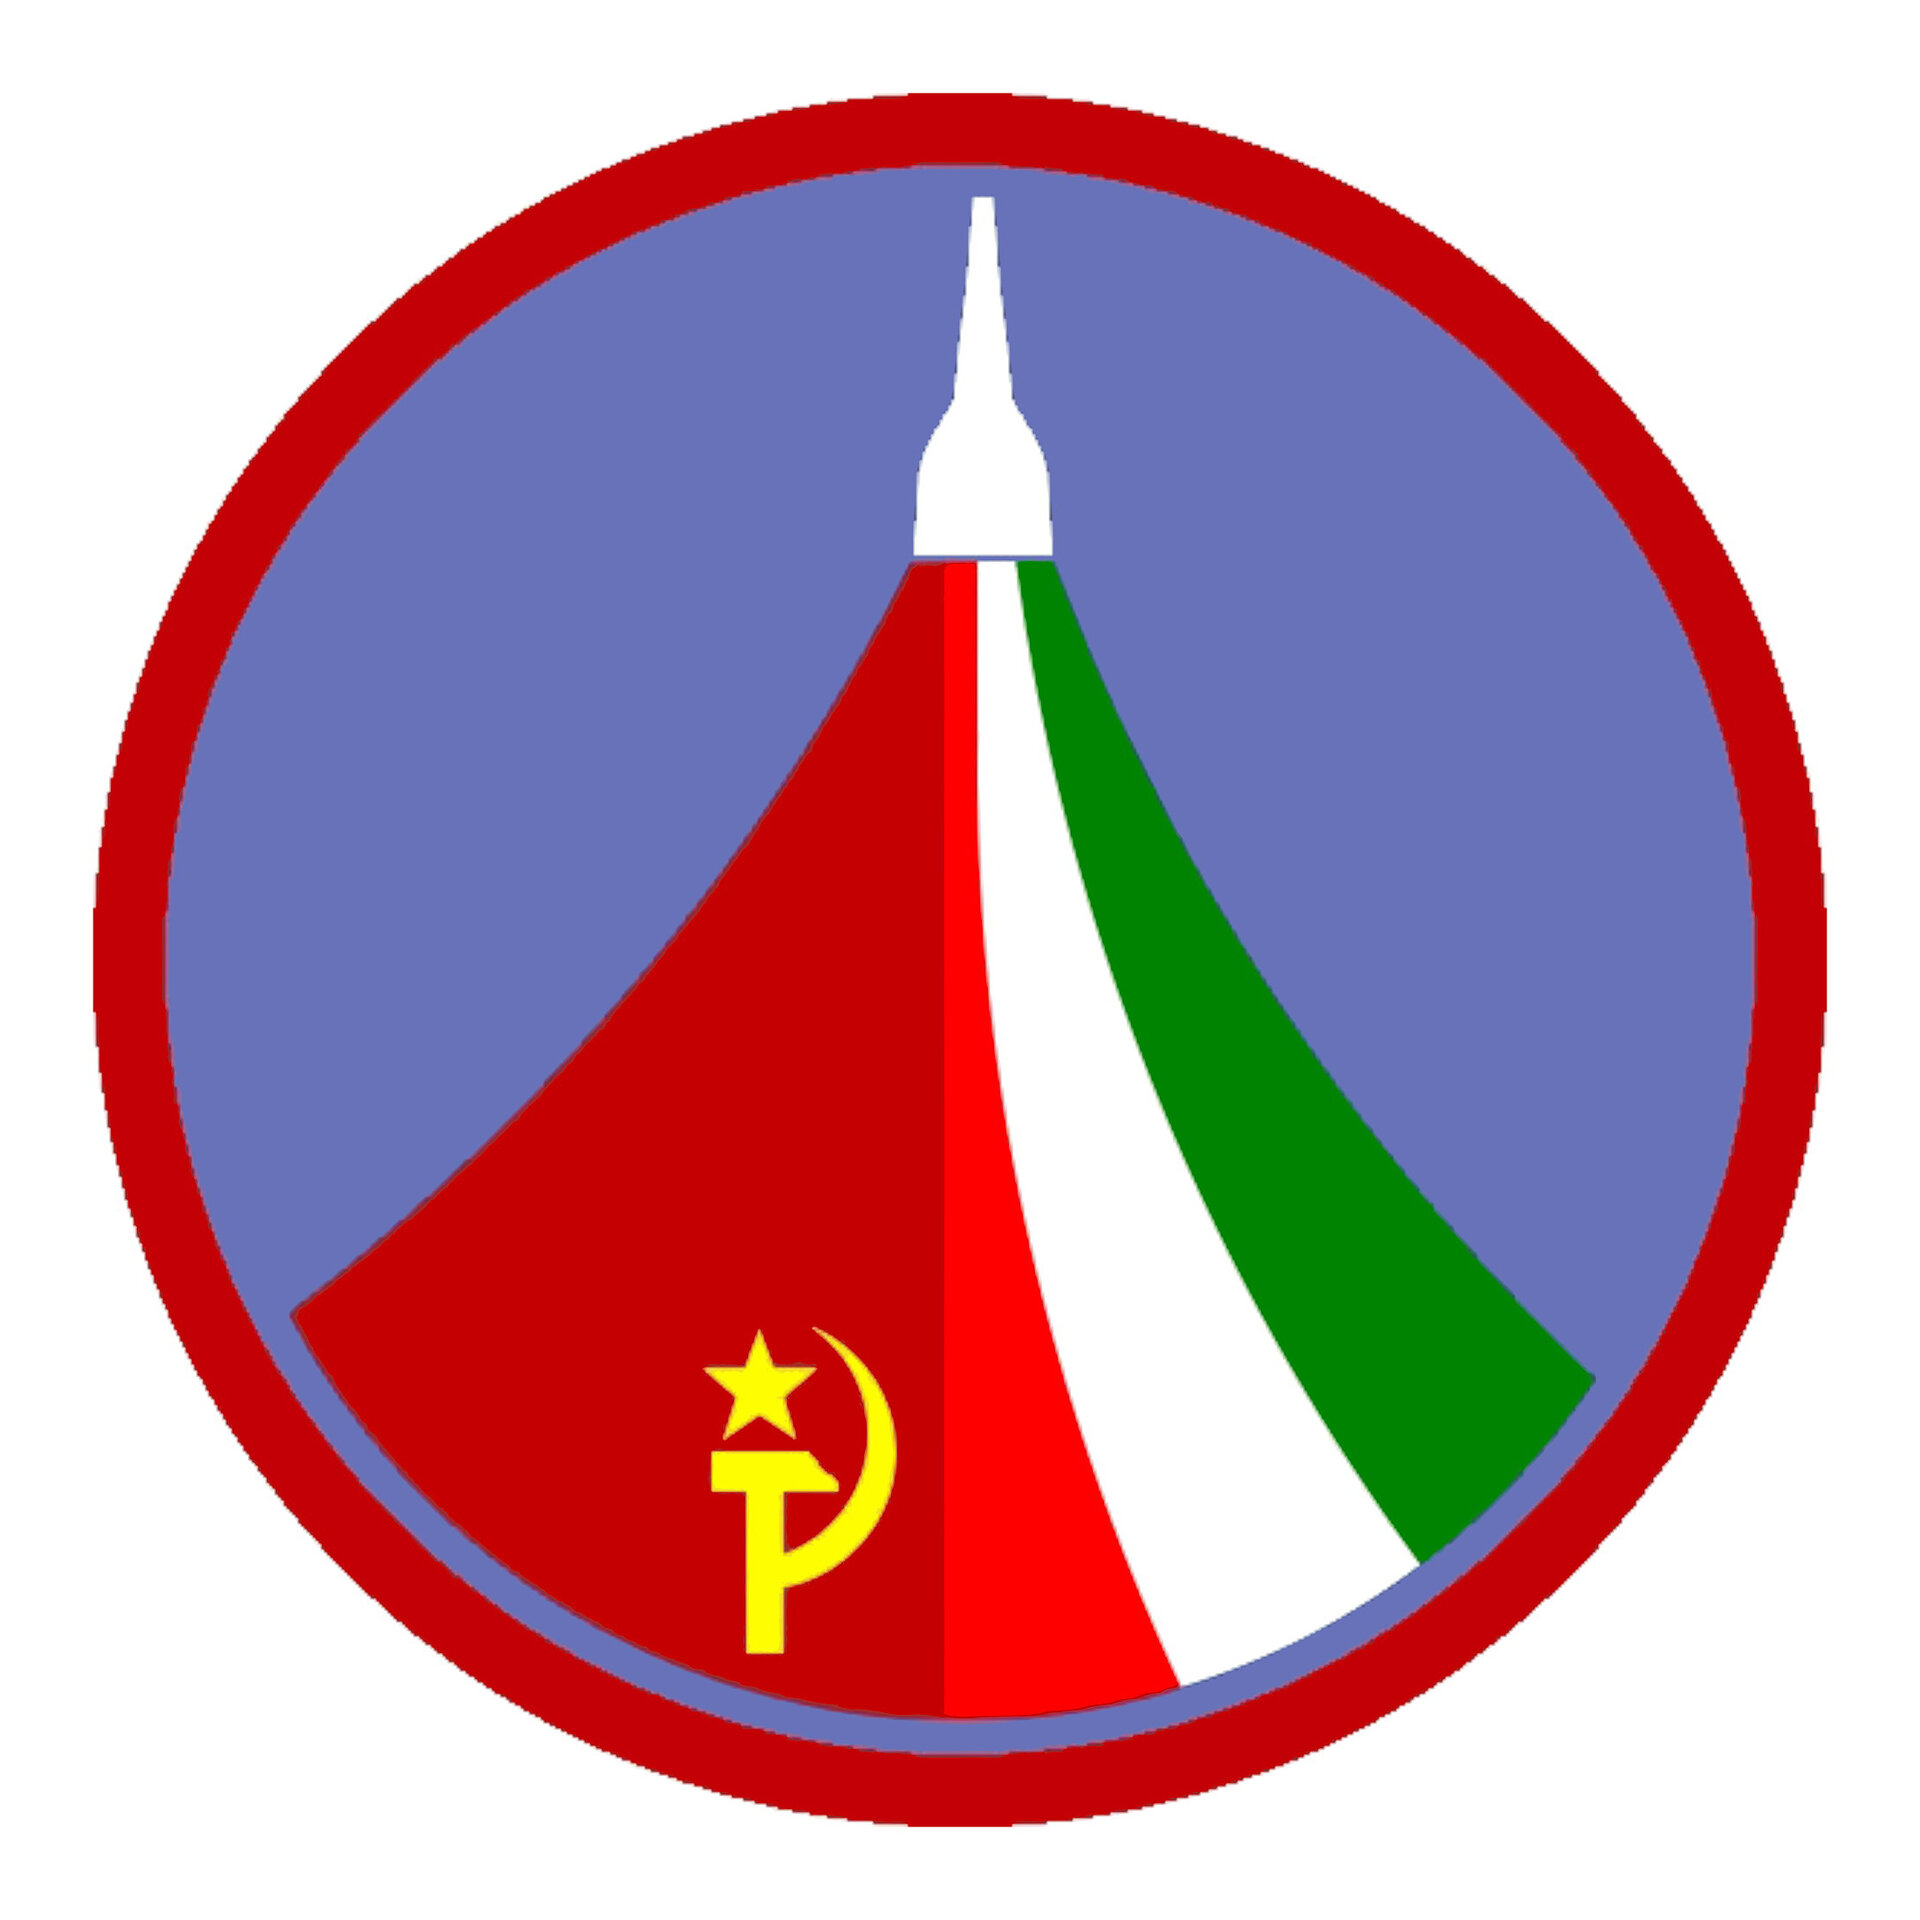 Soyuz 36 patch, 1980